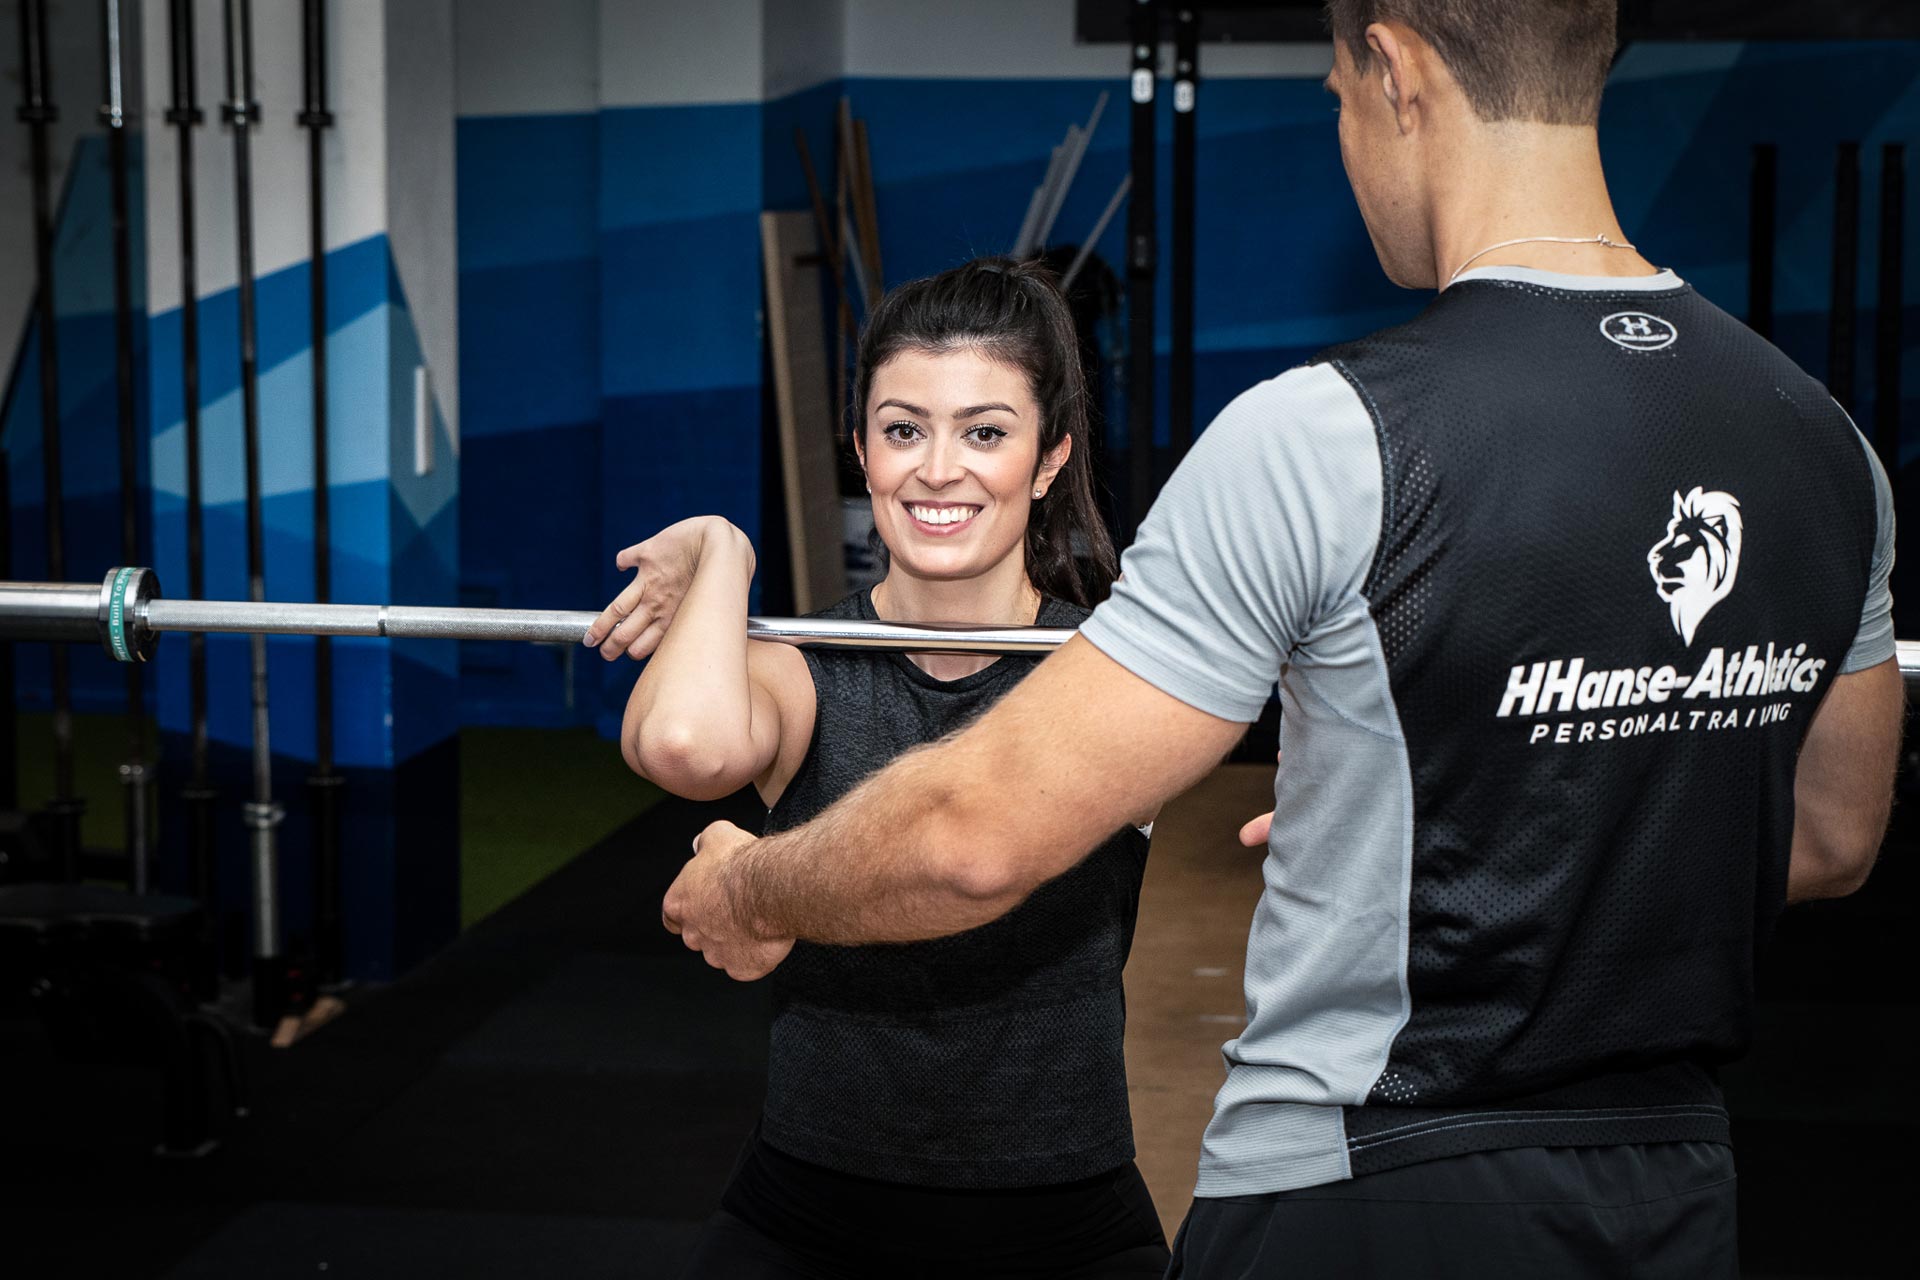 Hhanse-Athletics-Physiotherapy-Personal-Training-Hamburg